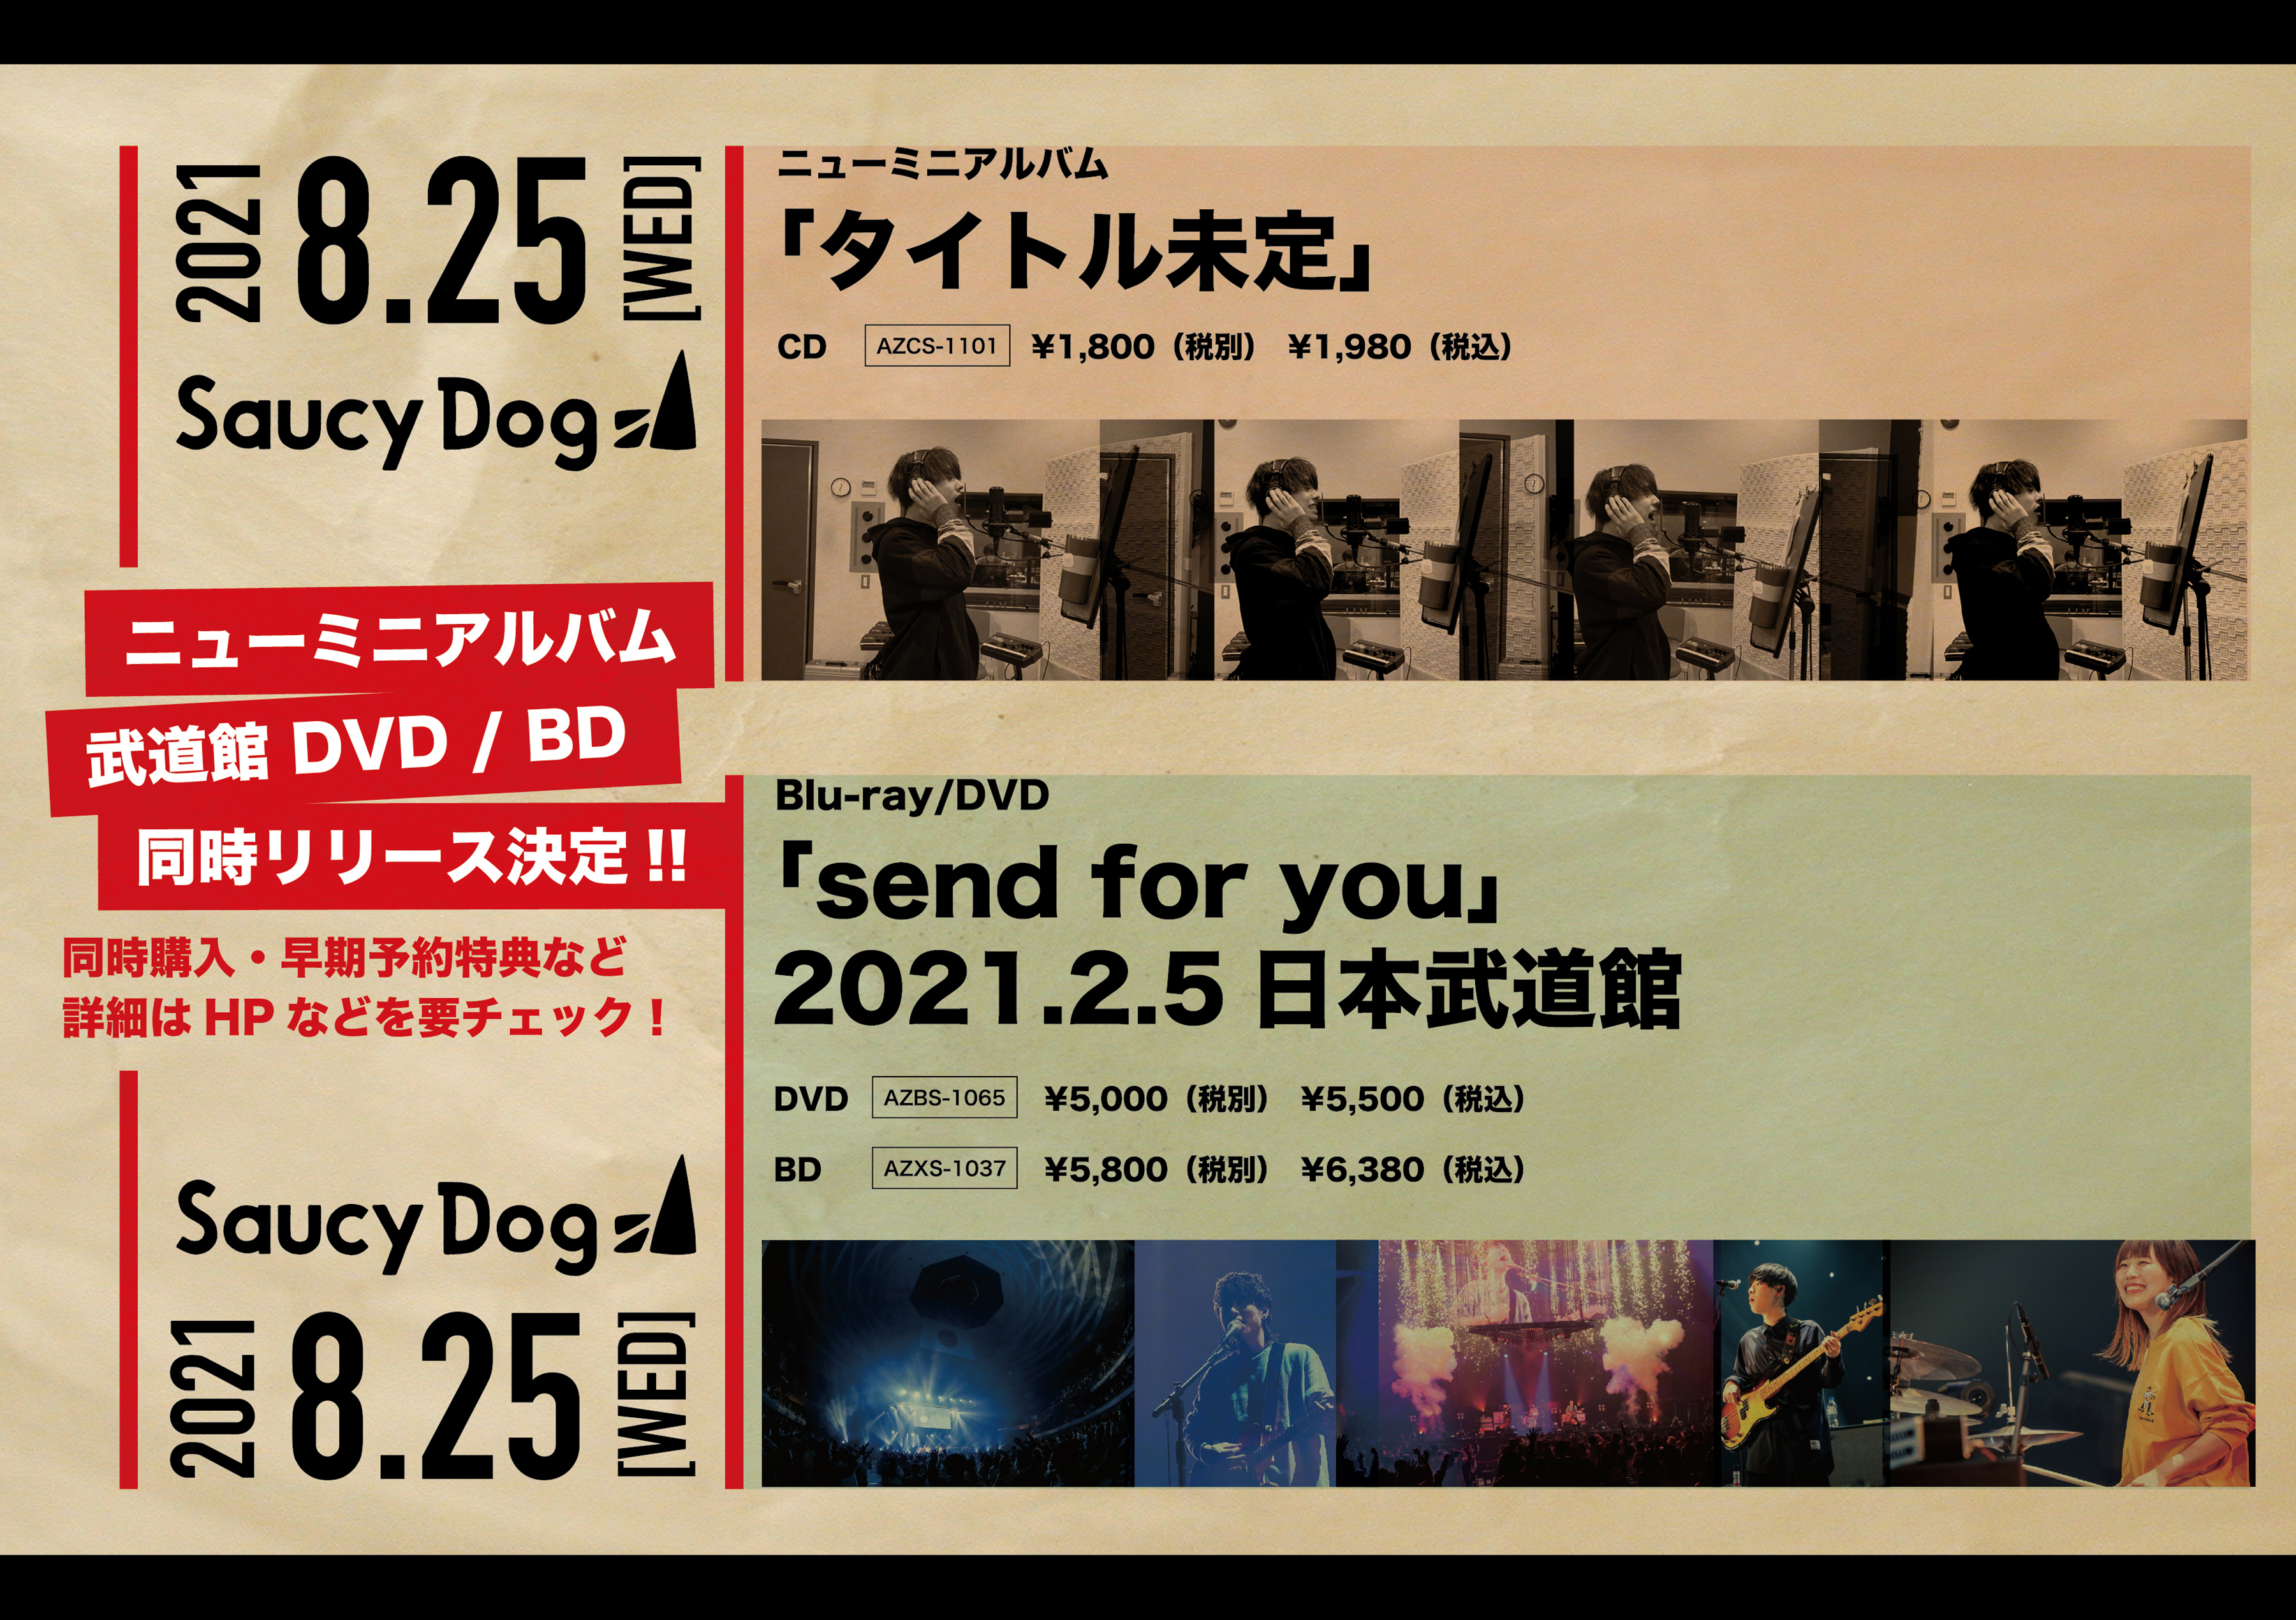 Saucy Dog グッズまとめ売り - vietvsp.com